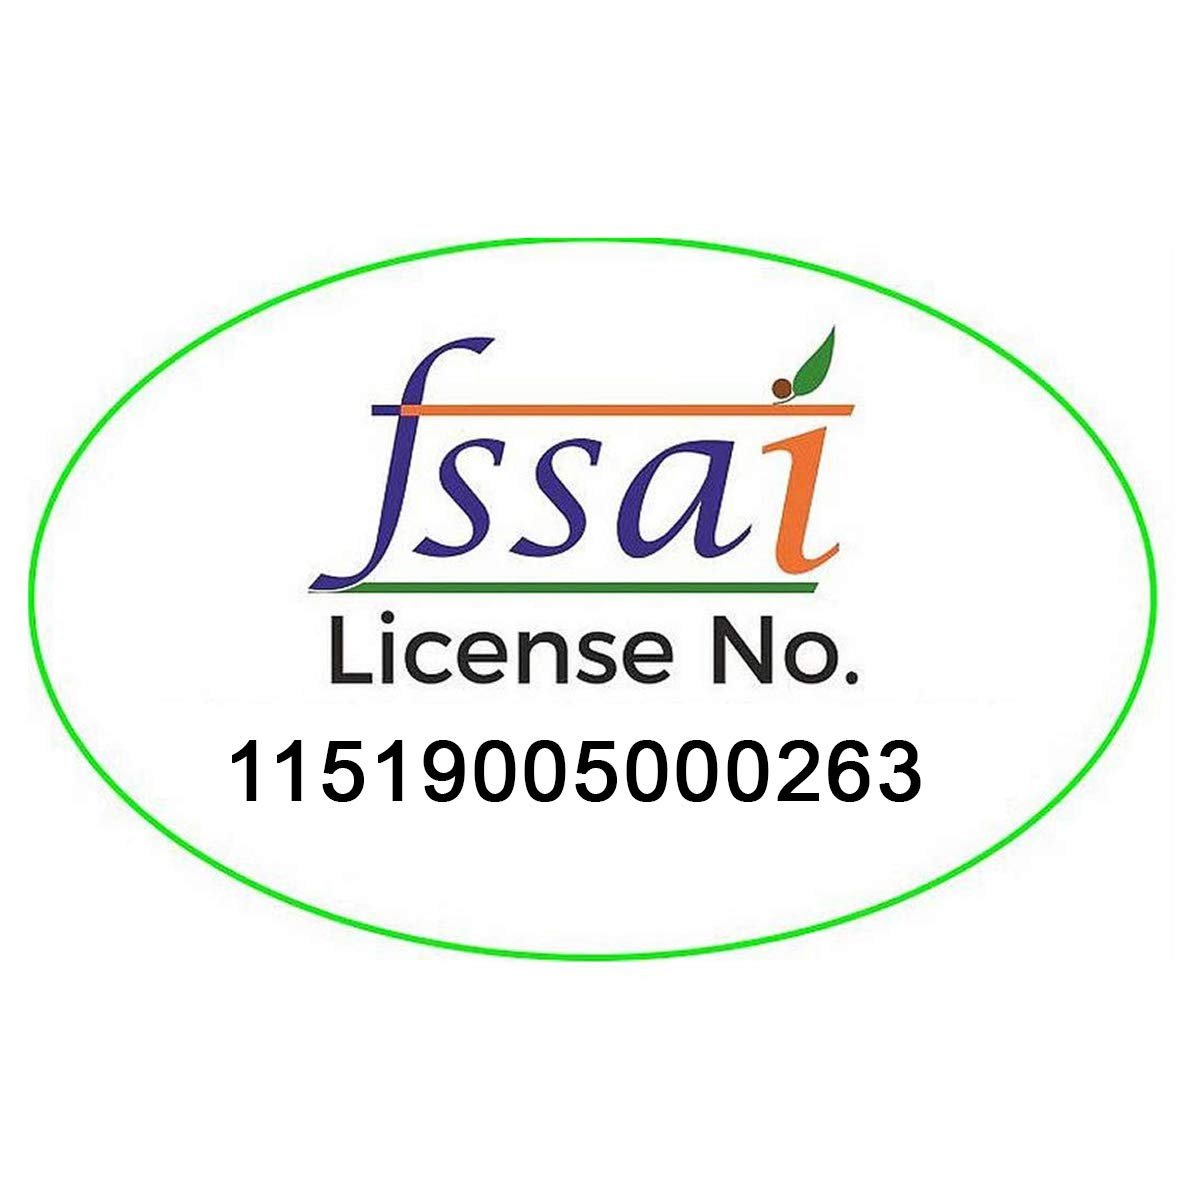 Fssai License Online  - EAT Anytime